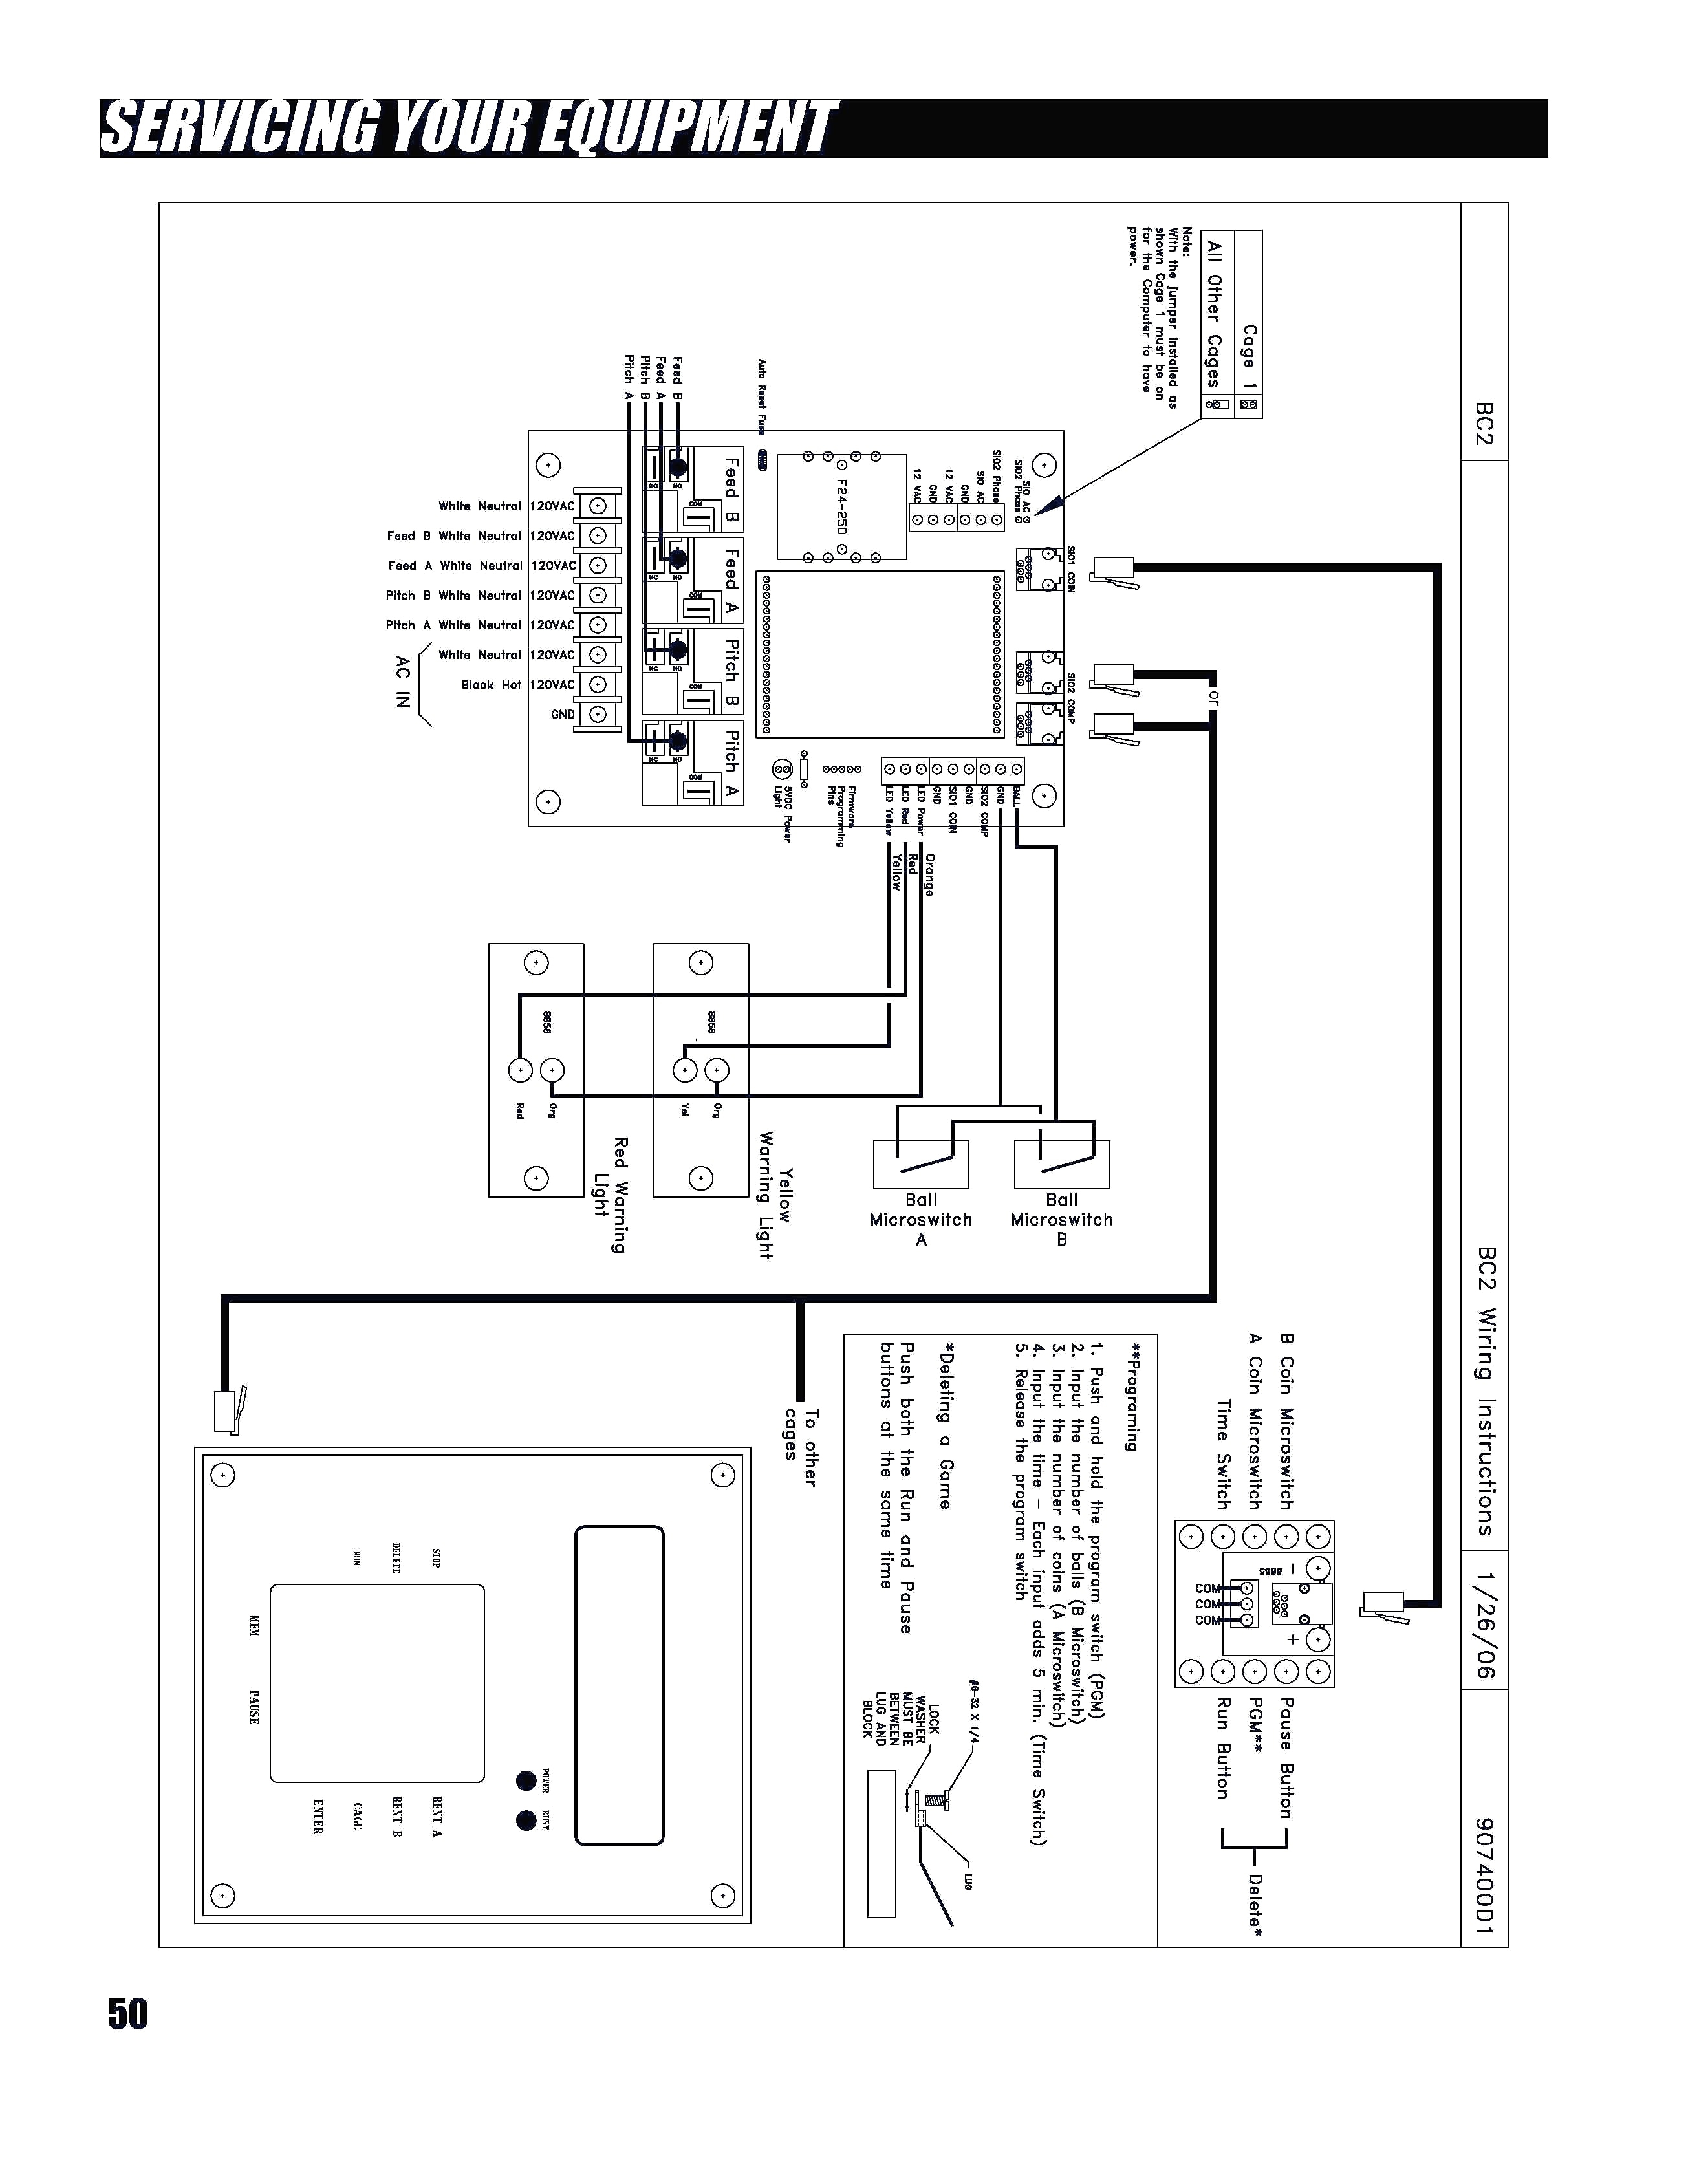 Wagner Electric Motor Wiring Diagram | Free Wiring Diagram - Dayton Electric Motors Wiring Diagram